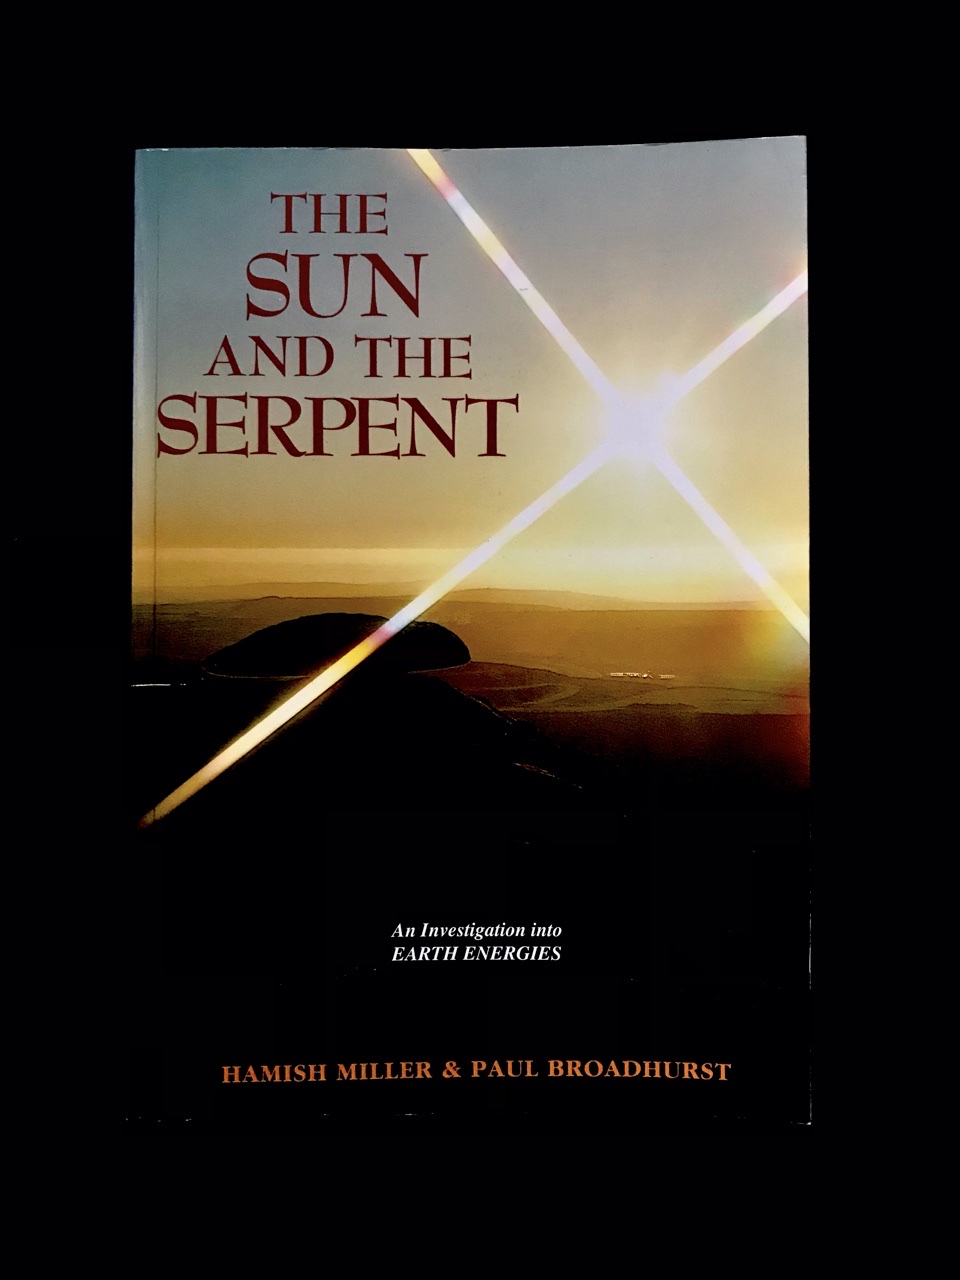 The Sun & The Serpent by H. Miller & P. Broadhurst